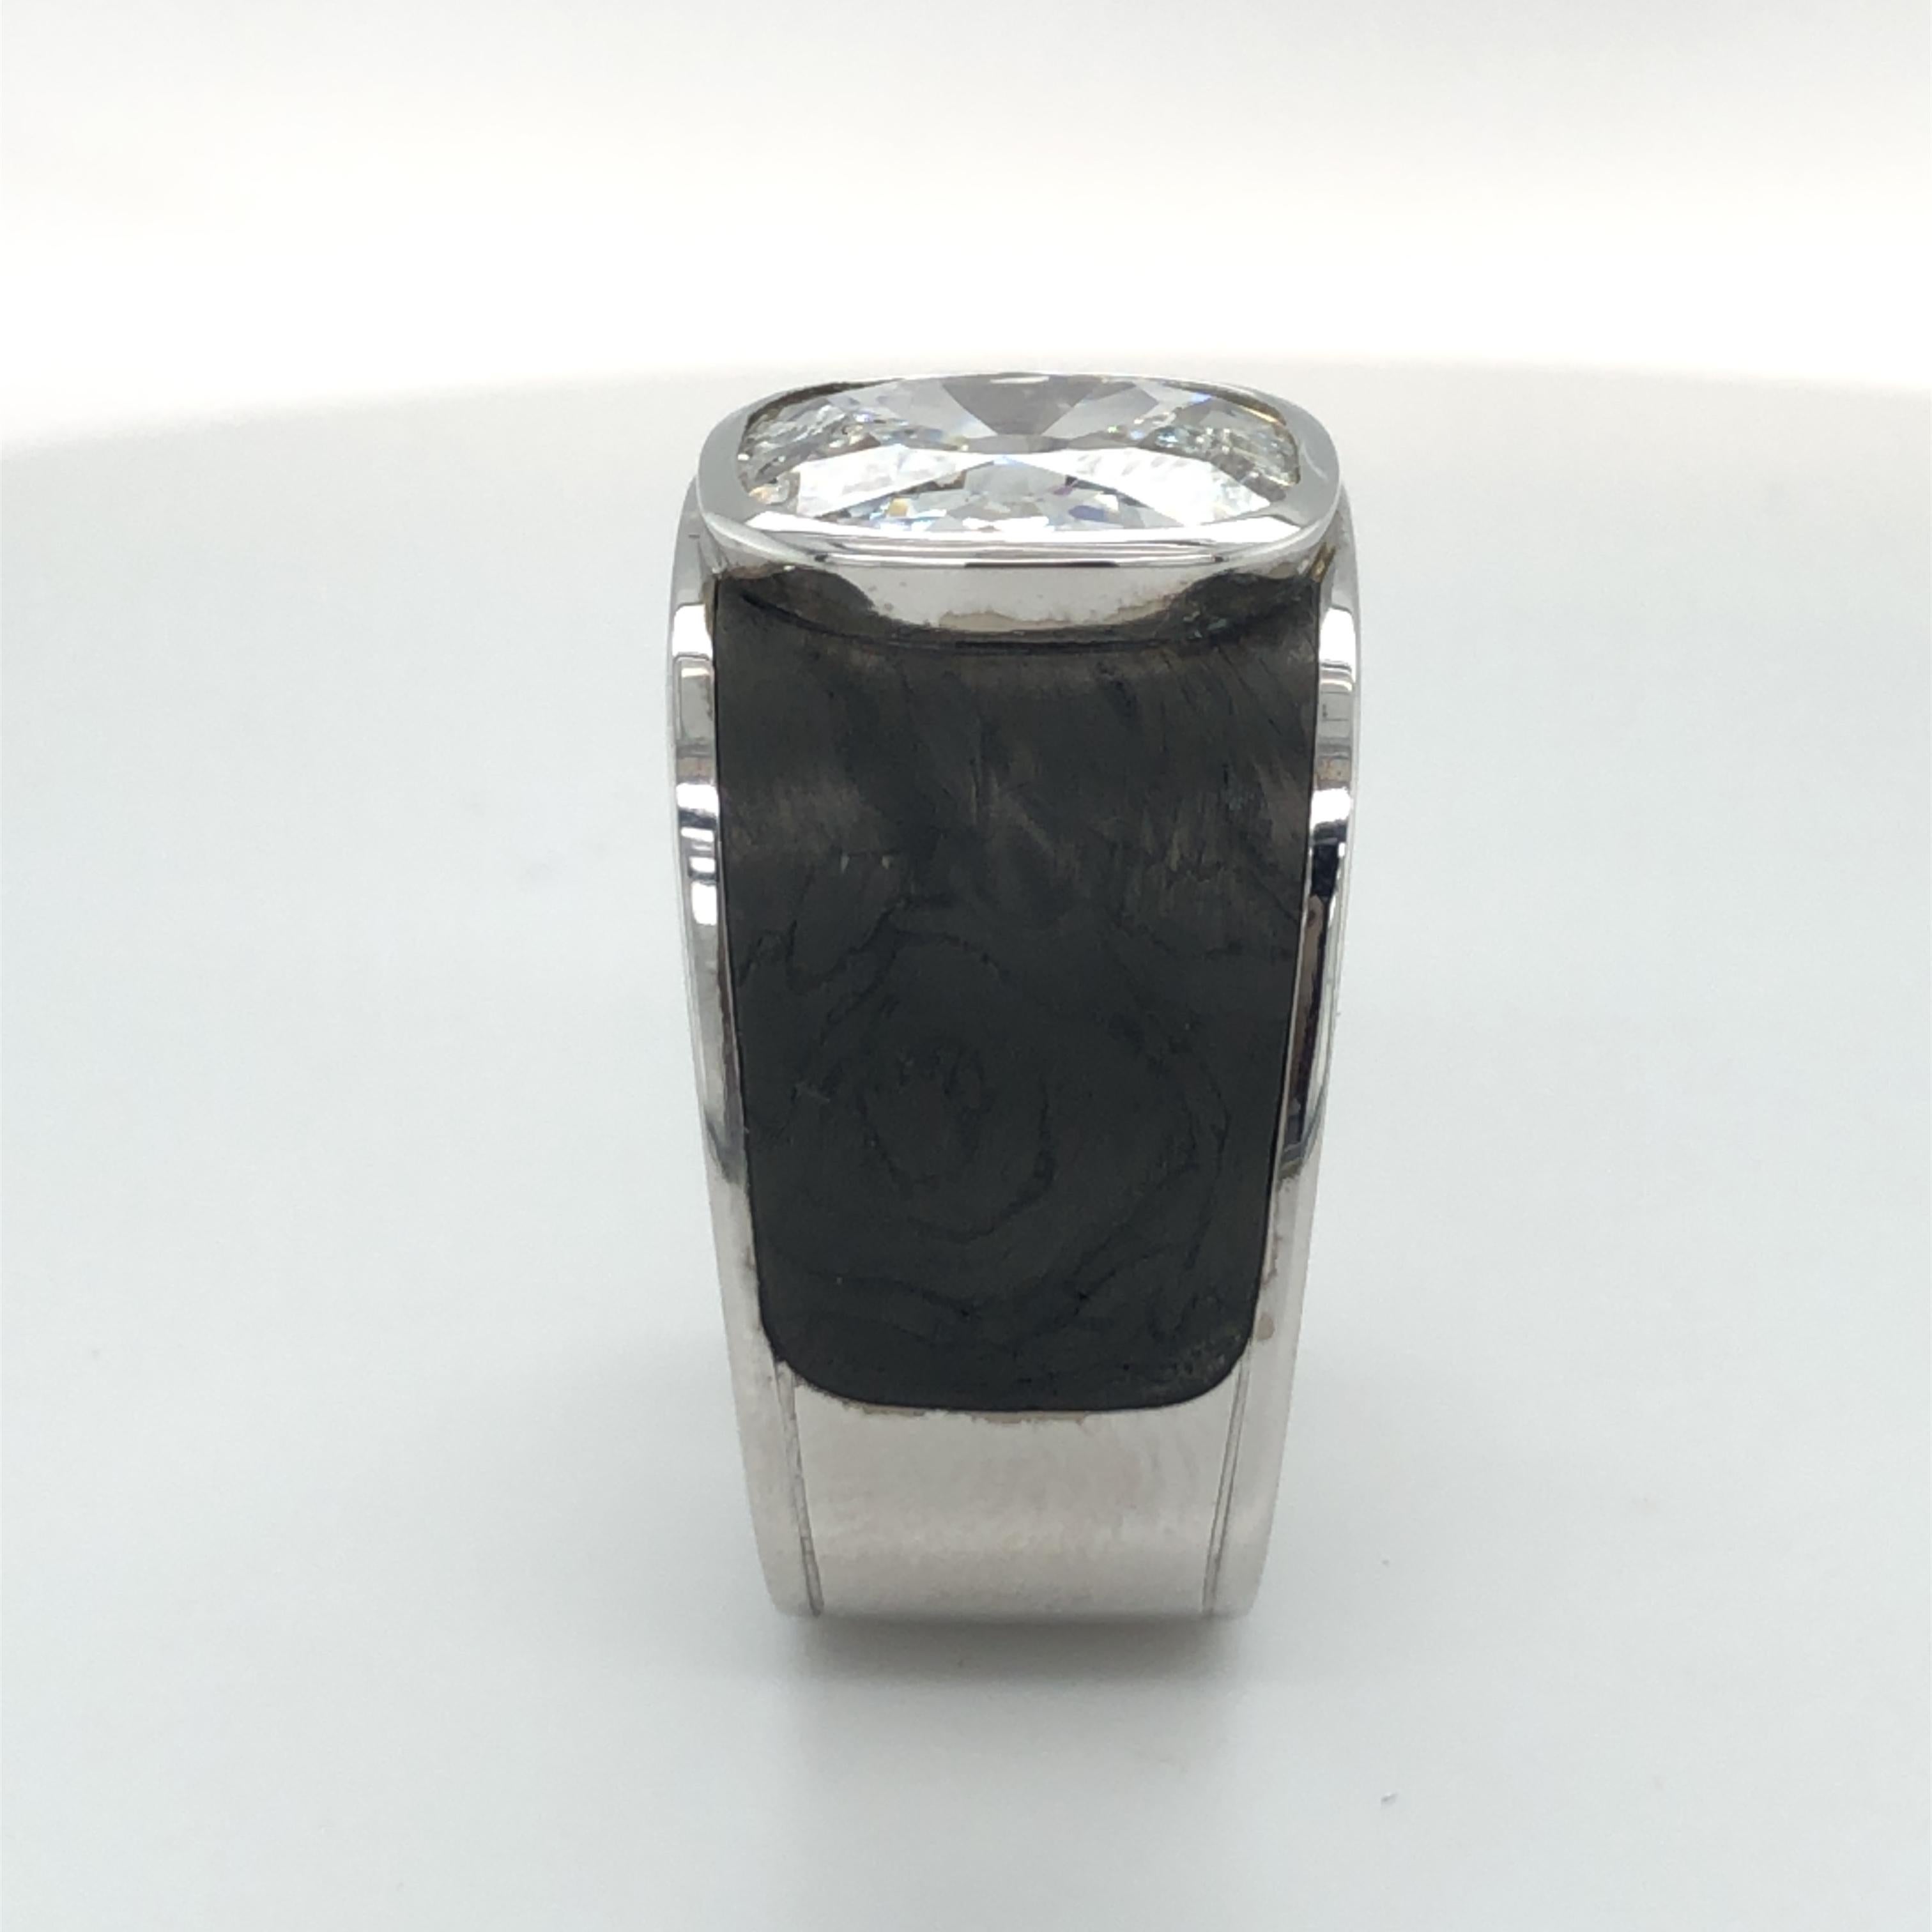 Women's or Men's Binder Moerisch 3.41 Carat Diamond Ring in 18 Karat White Gold and Carbon